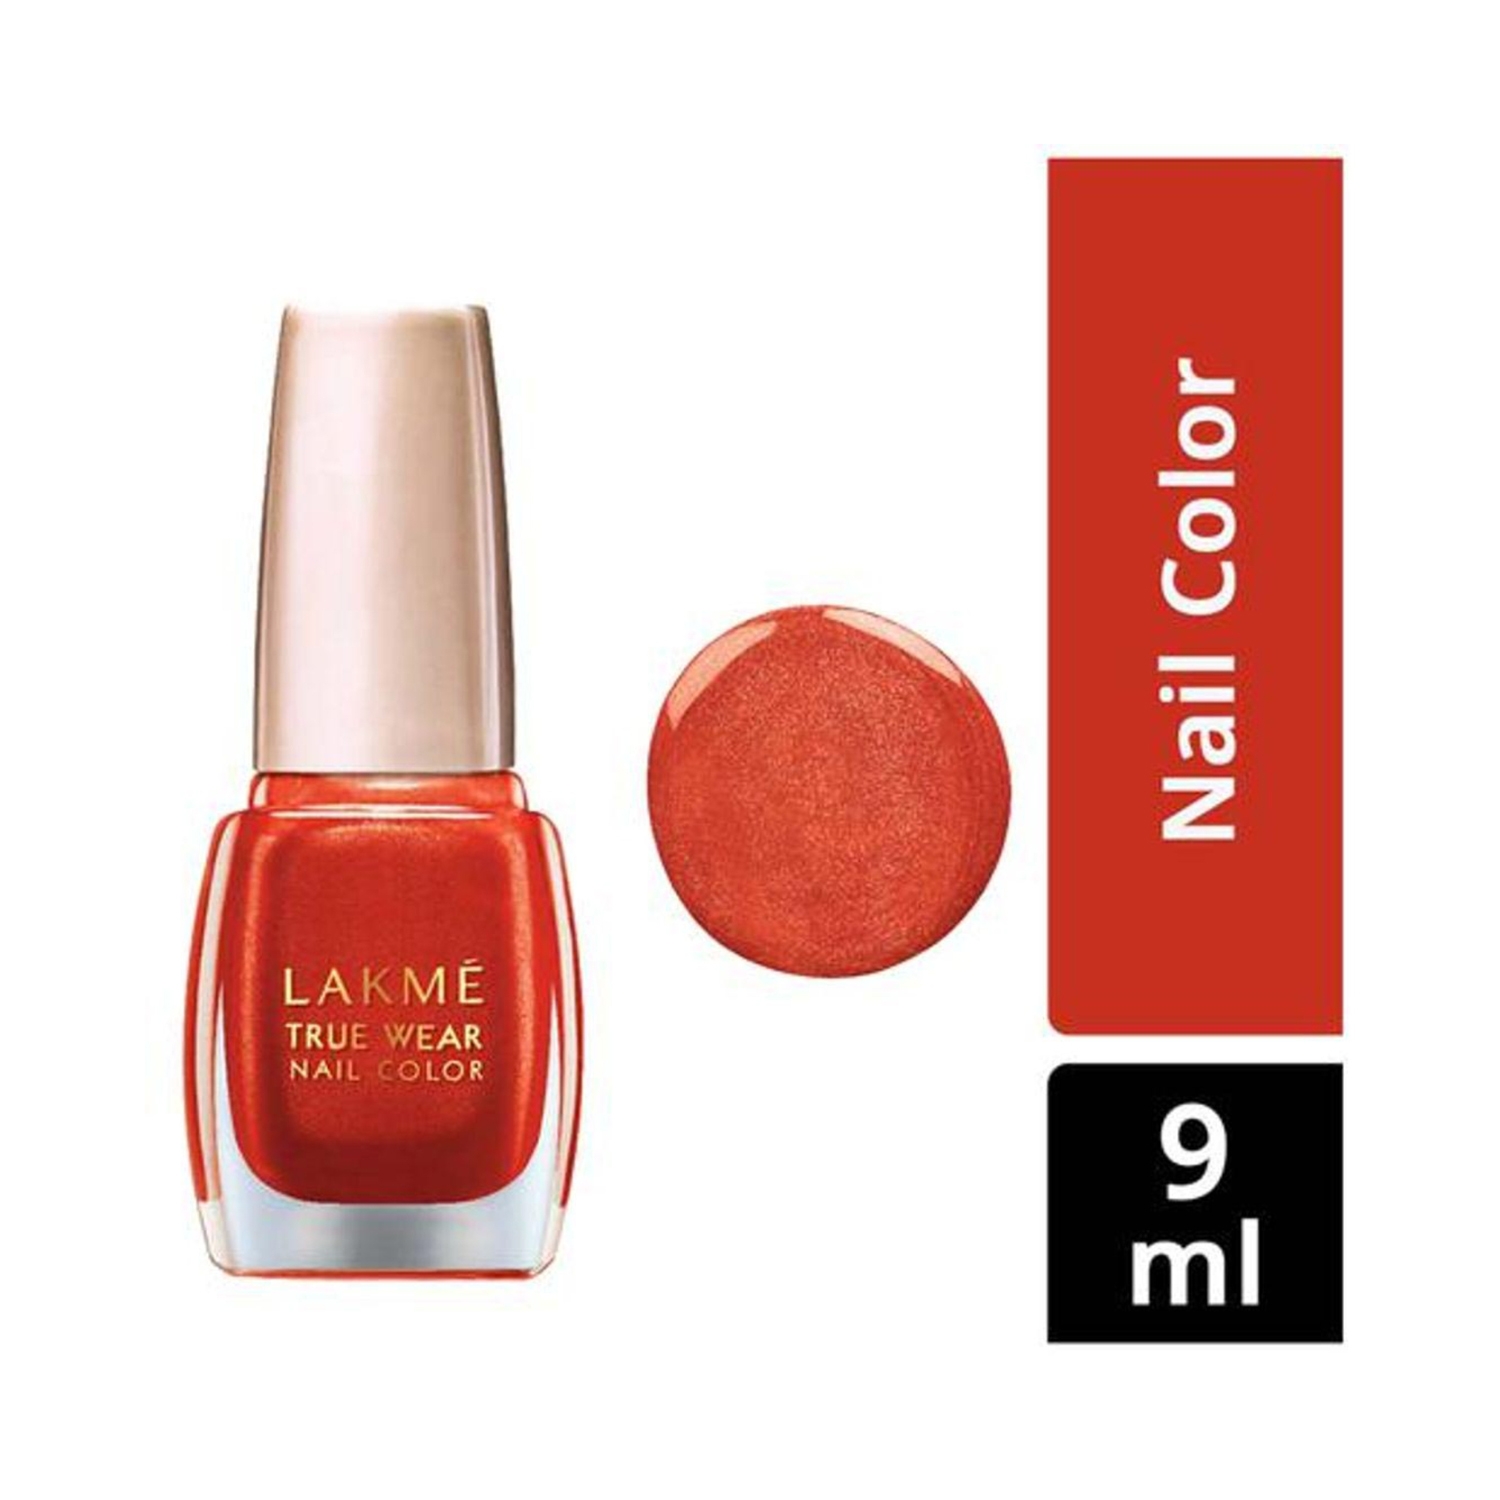 Lakme | Lakme True Wear Nail Color - 505 Shade (9ml)